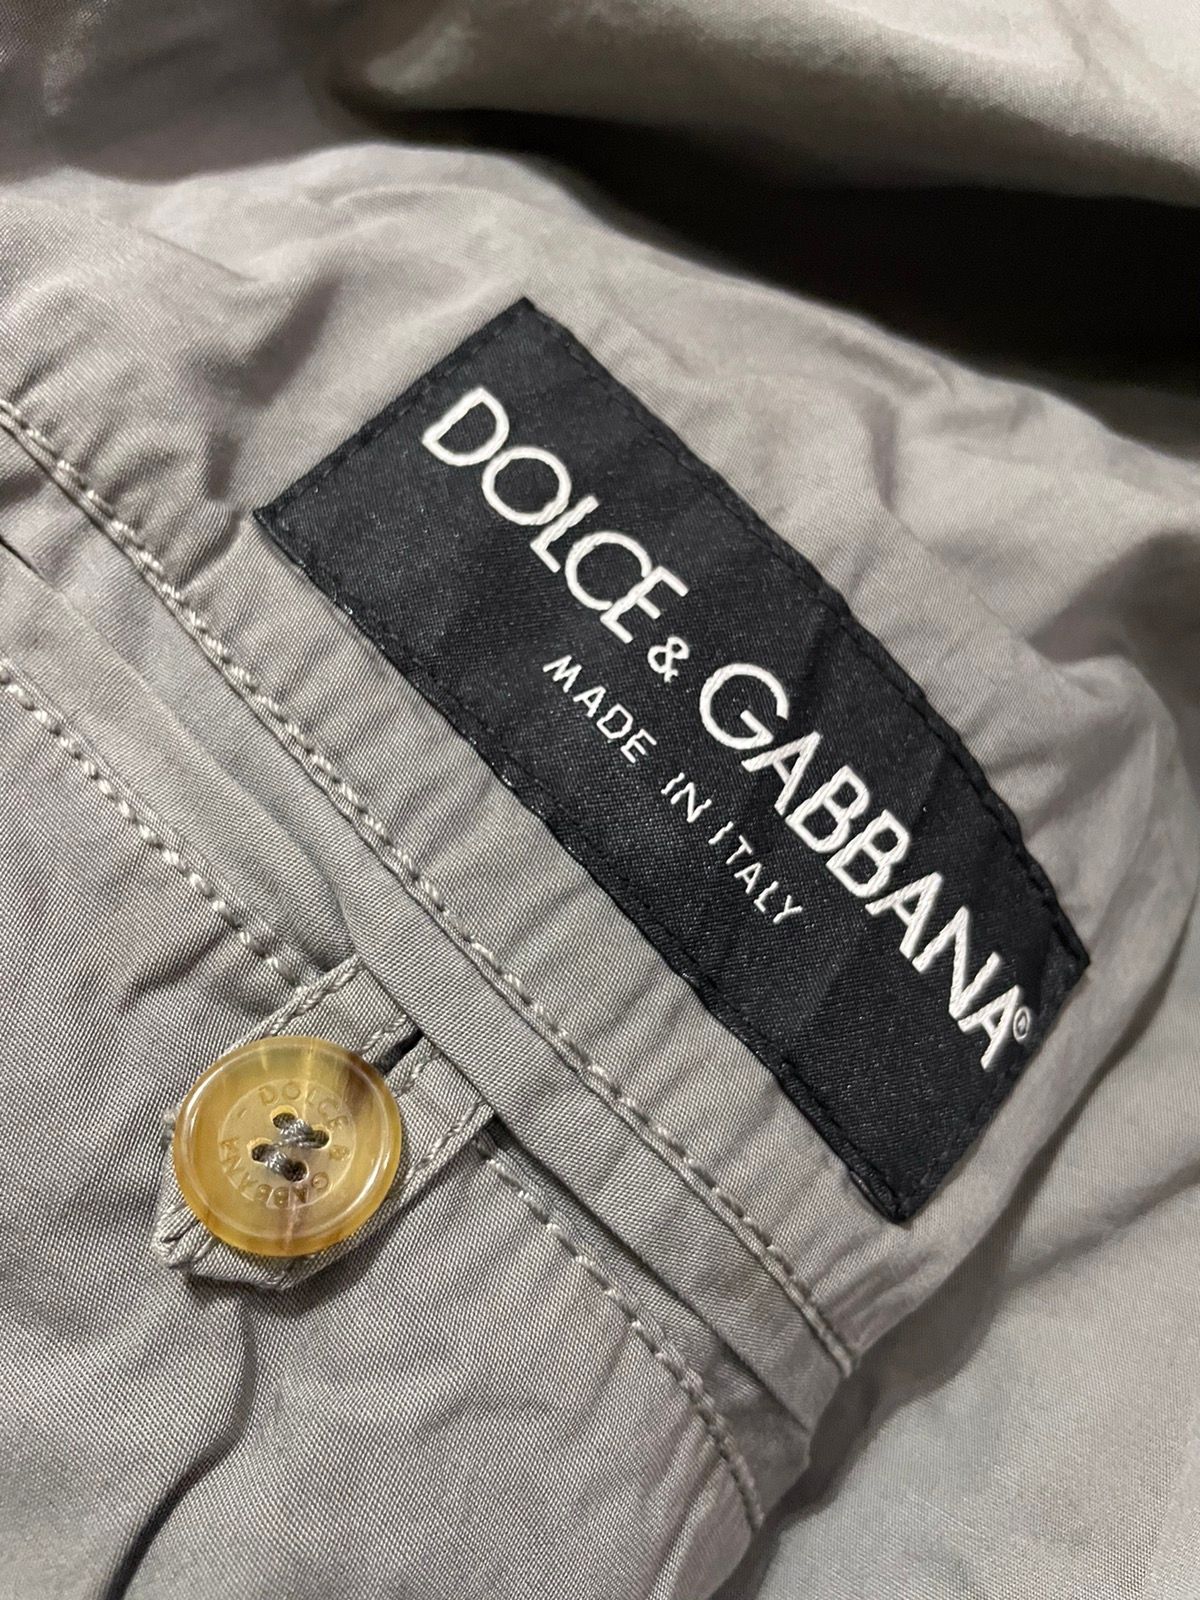 Dolce & Gabbana Dolce & Gabbana ss 2003 3D multiple pocket cargo jacket Size US S / EU 44-46 / 1 - 16 Thumbnail